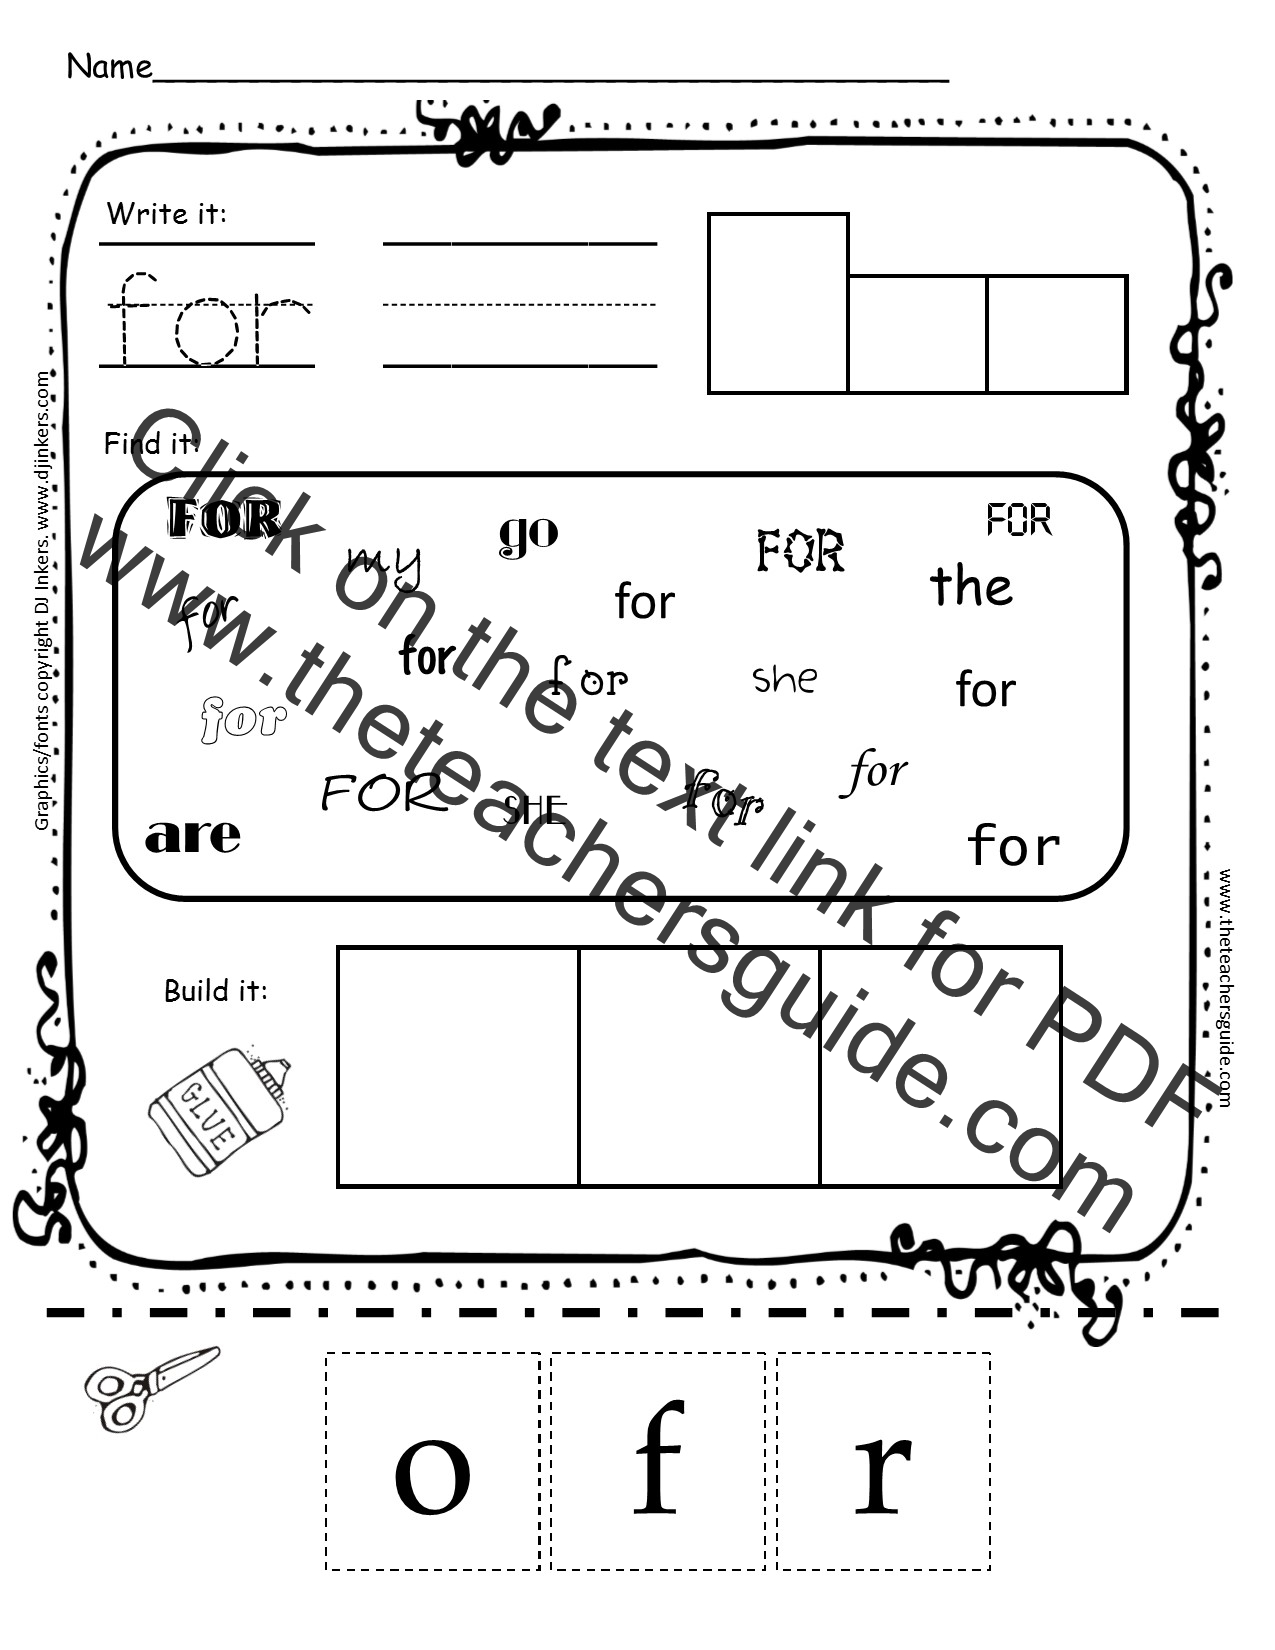 kindergarten-sight-word-printouts-from-the-teacher-s-guide